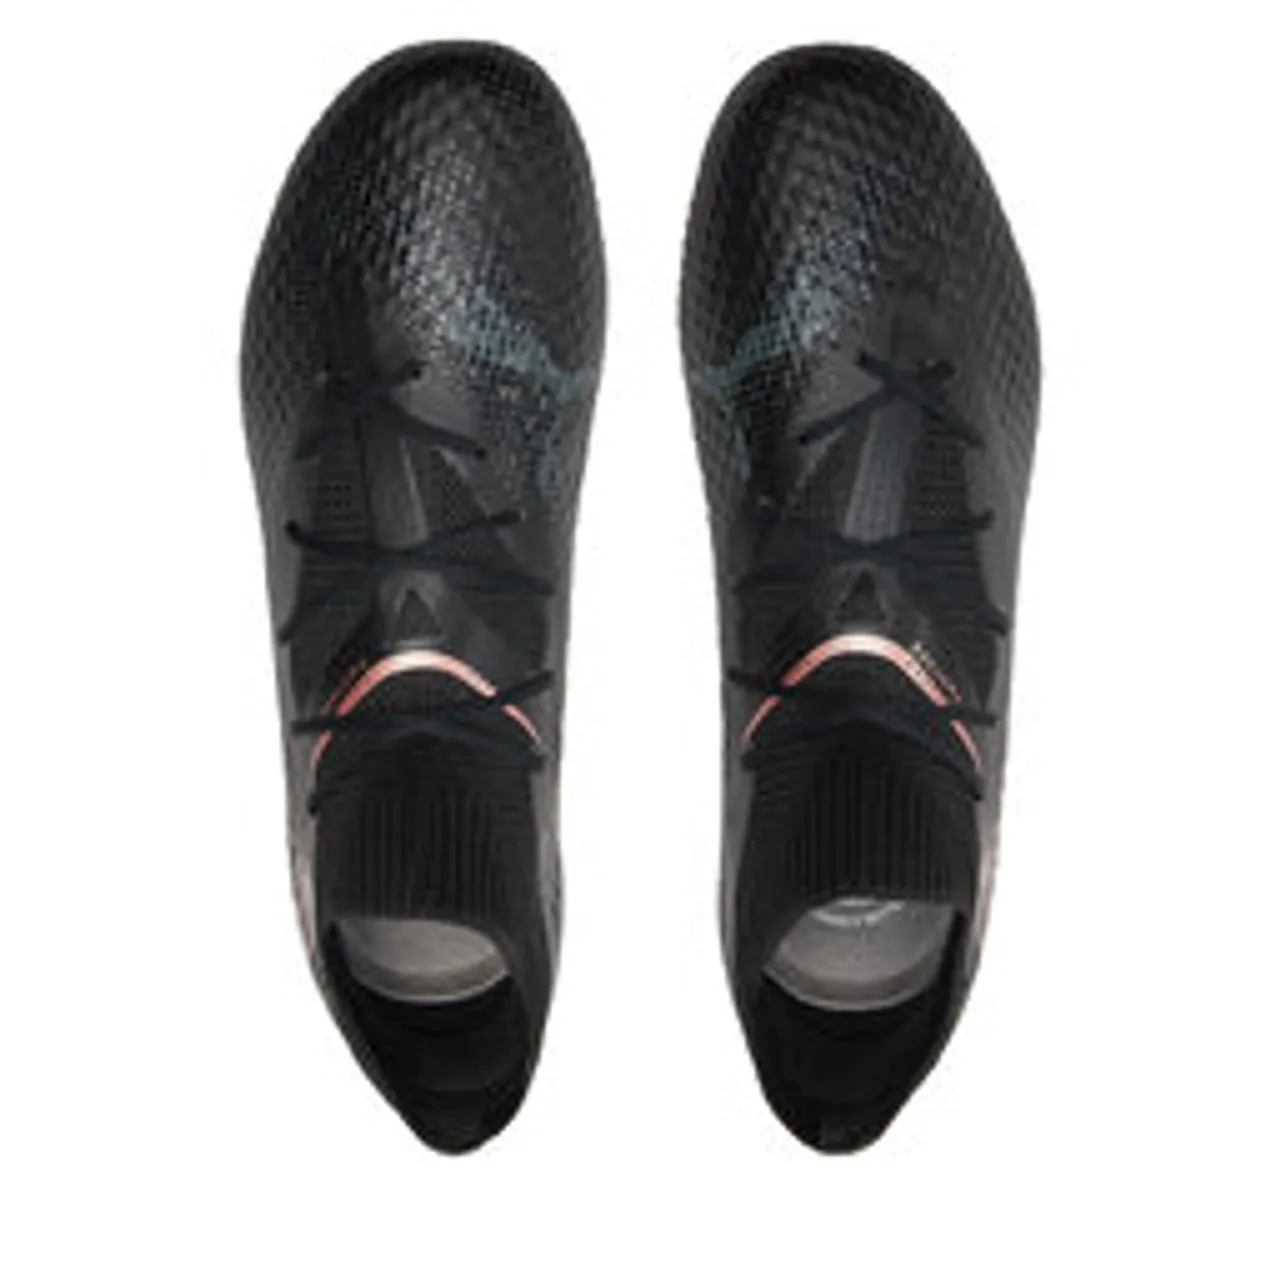 Schuhe Puma Future 7 Pro Fg/Ag 10770702 02 Black